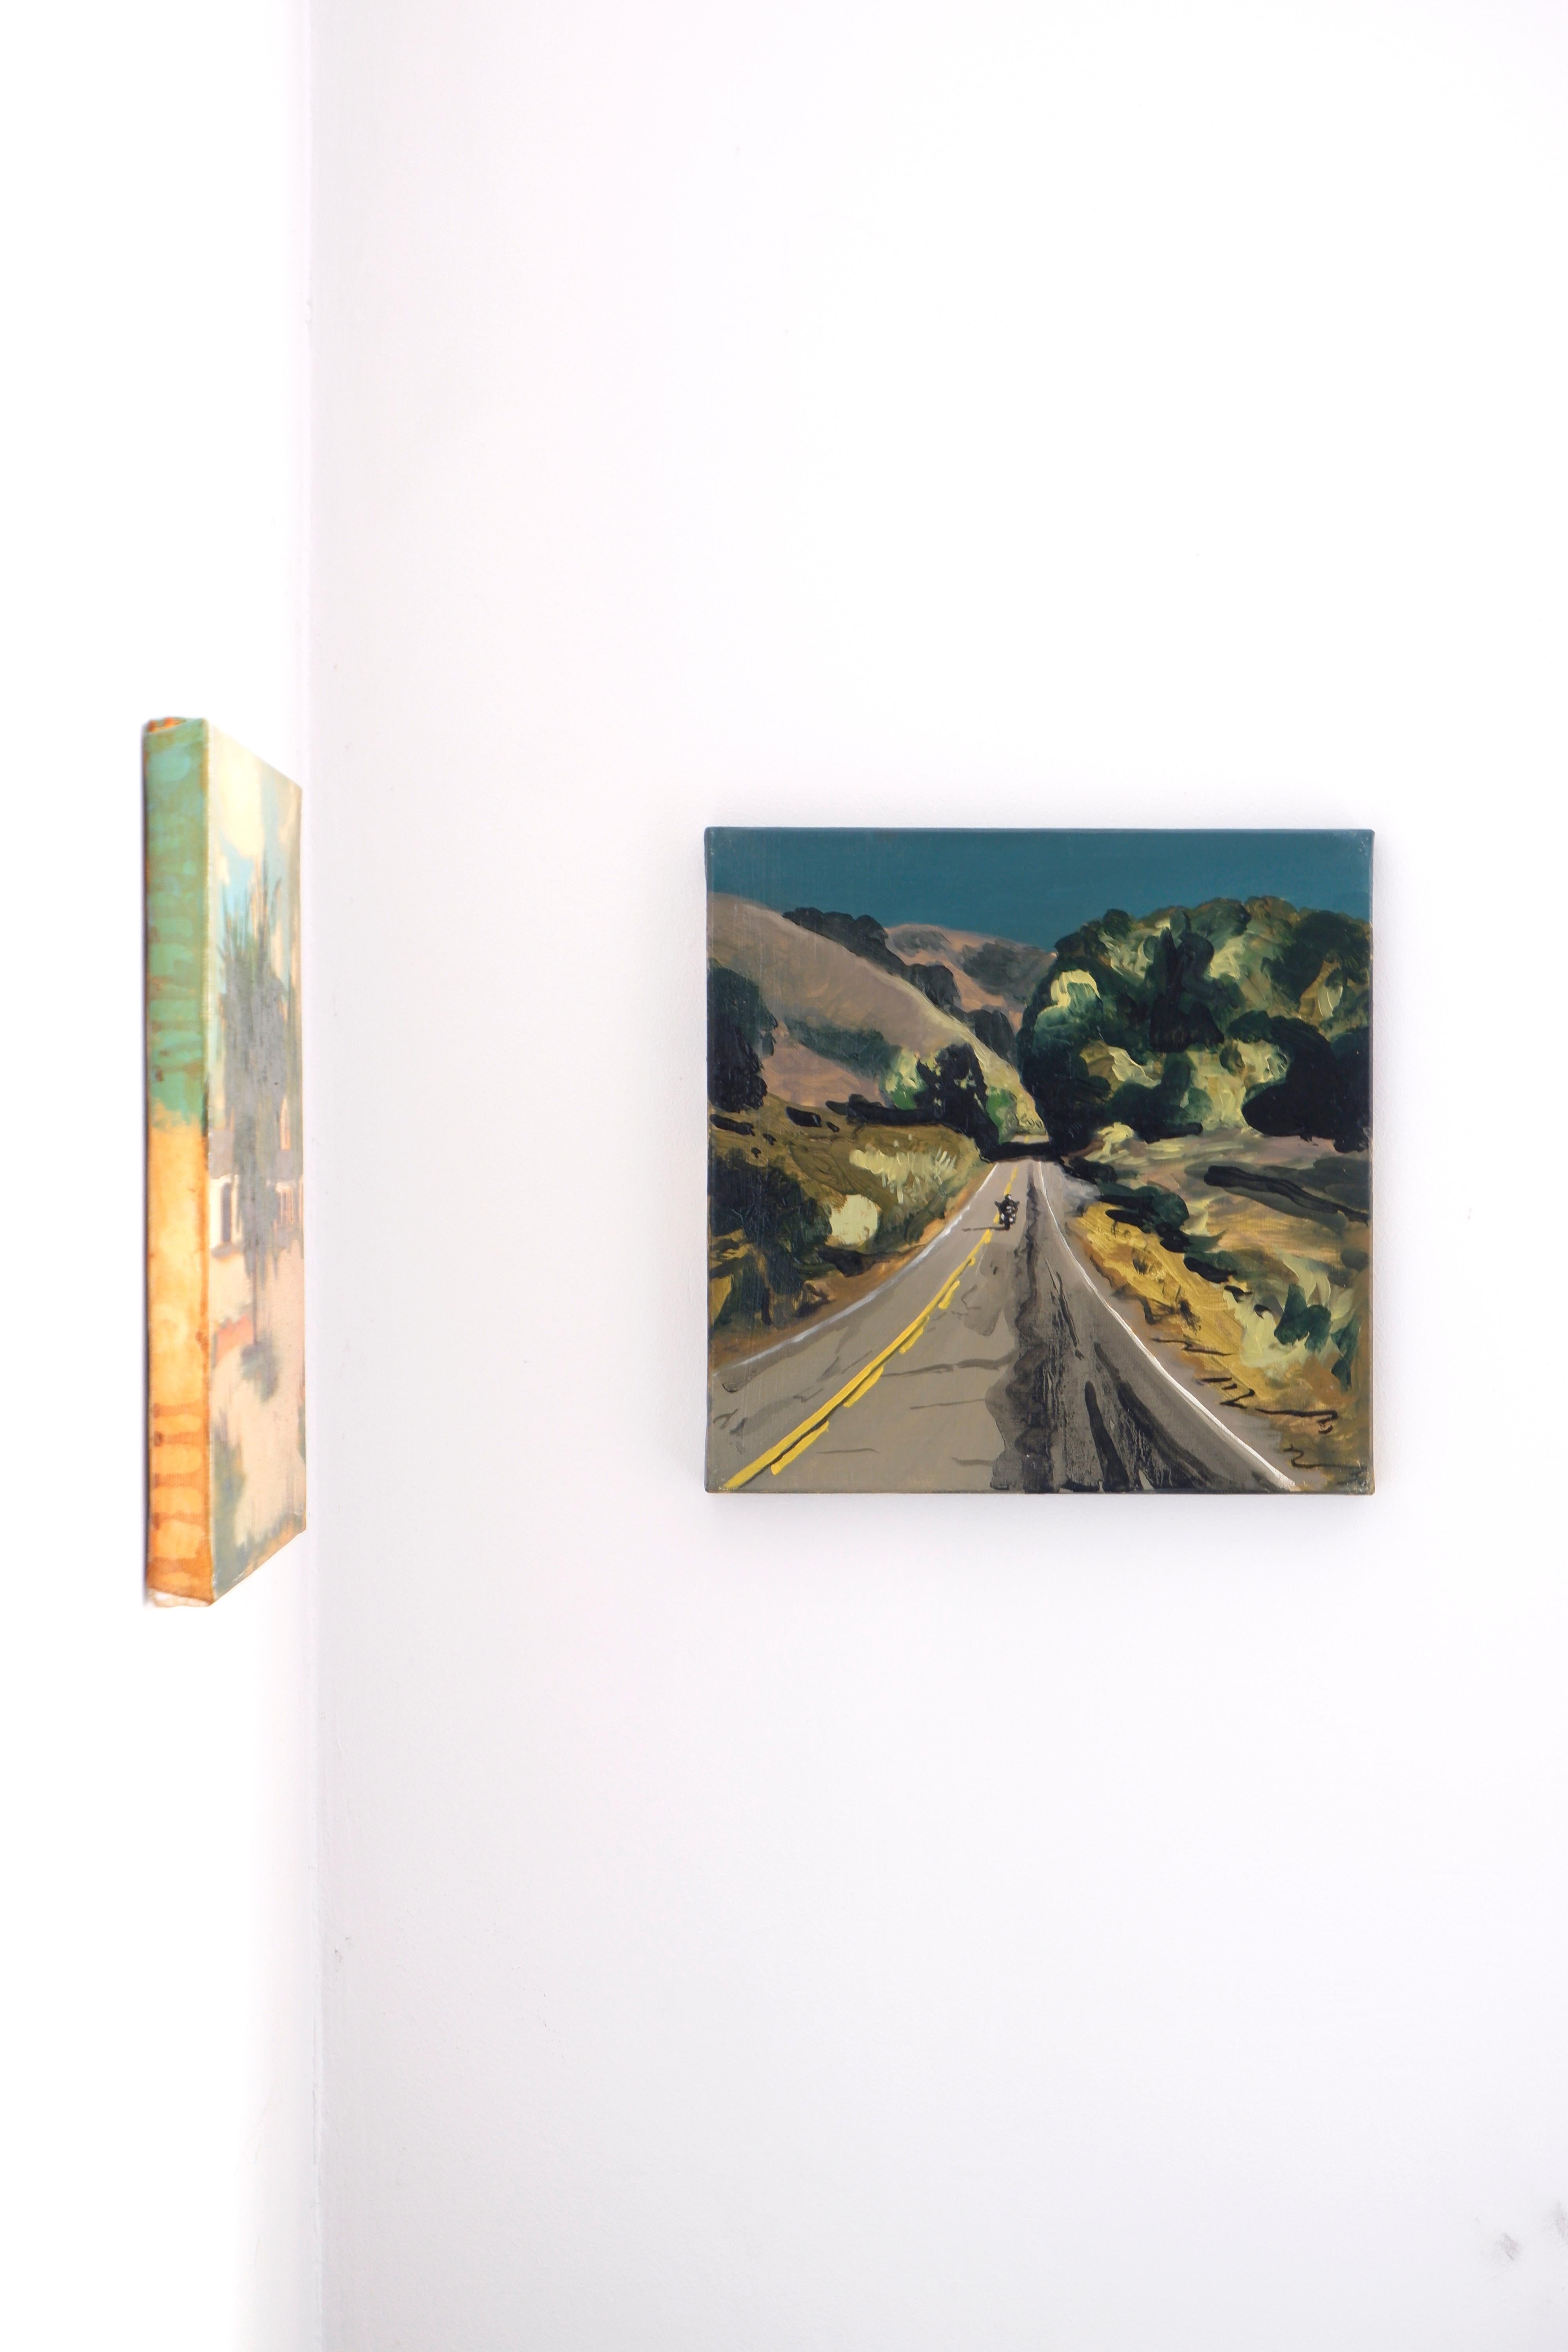 THE ROAD TO MALIBU - Expressive, Colourful USA Landscape Oil Painting, Biker - Black Landscape Painting by Piotr Szczur